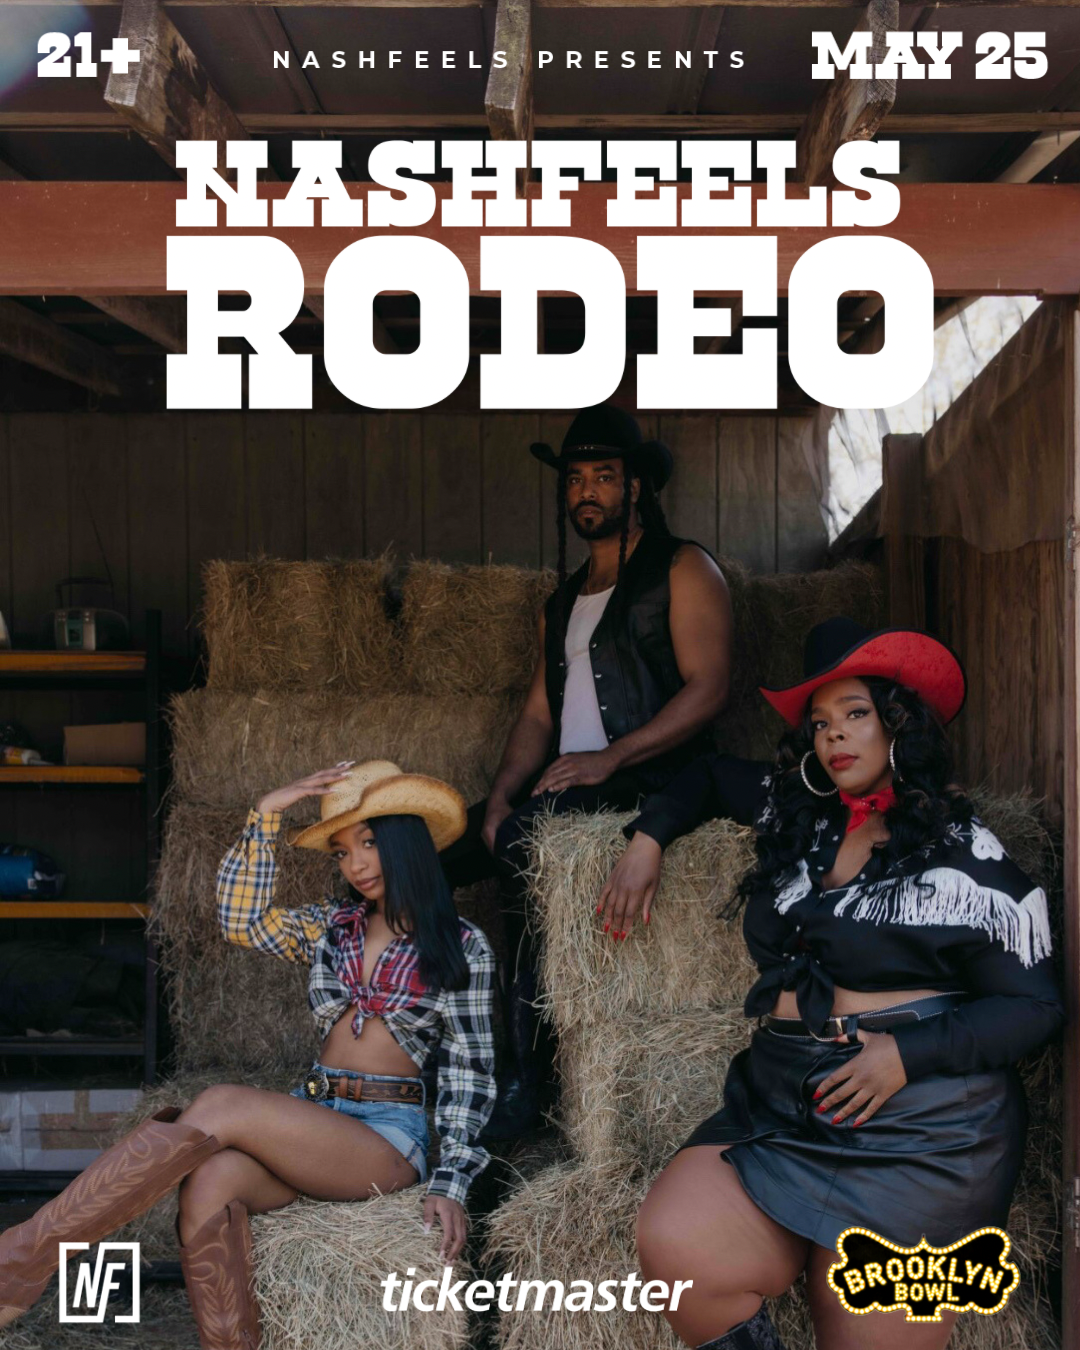 Nashfeels Presents: NASHFEELS RODEO (21+)